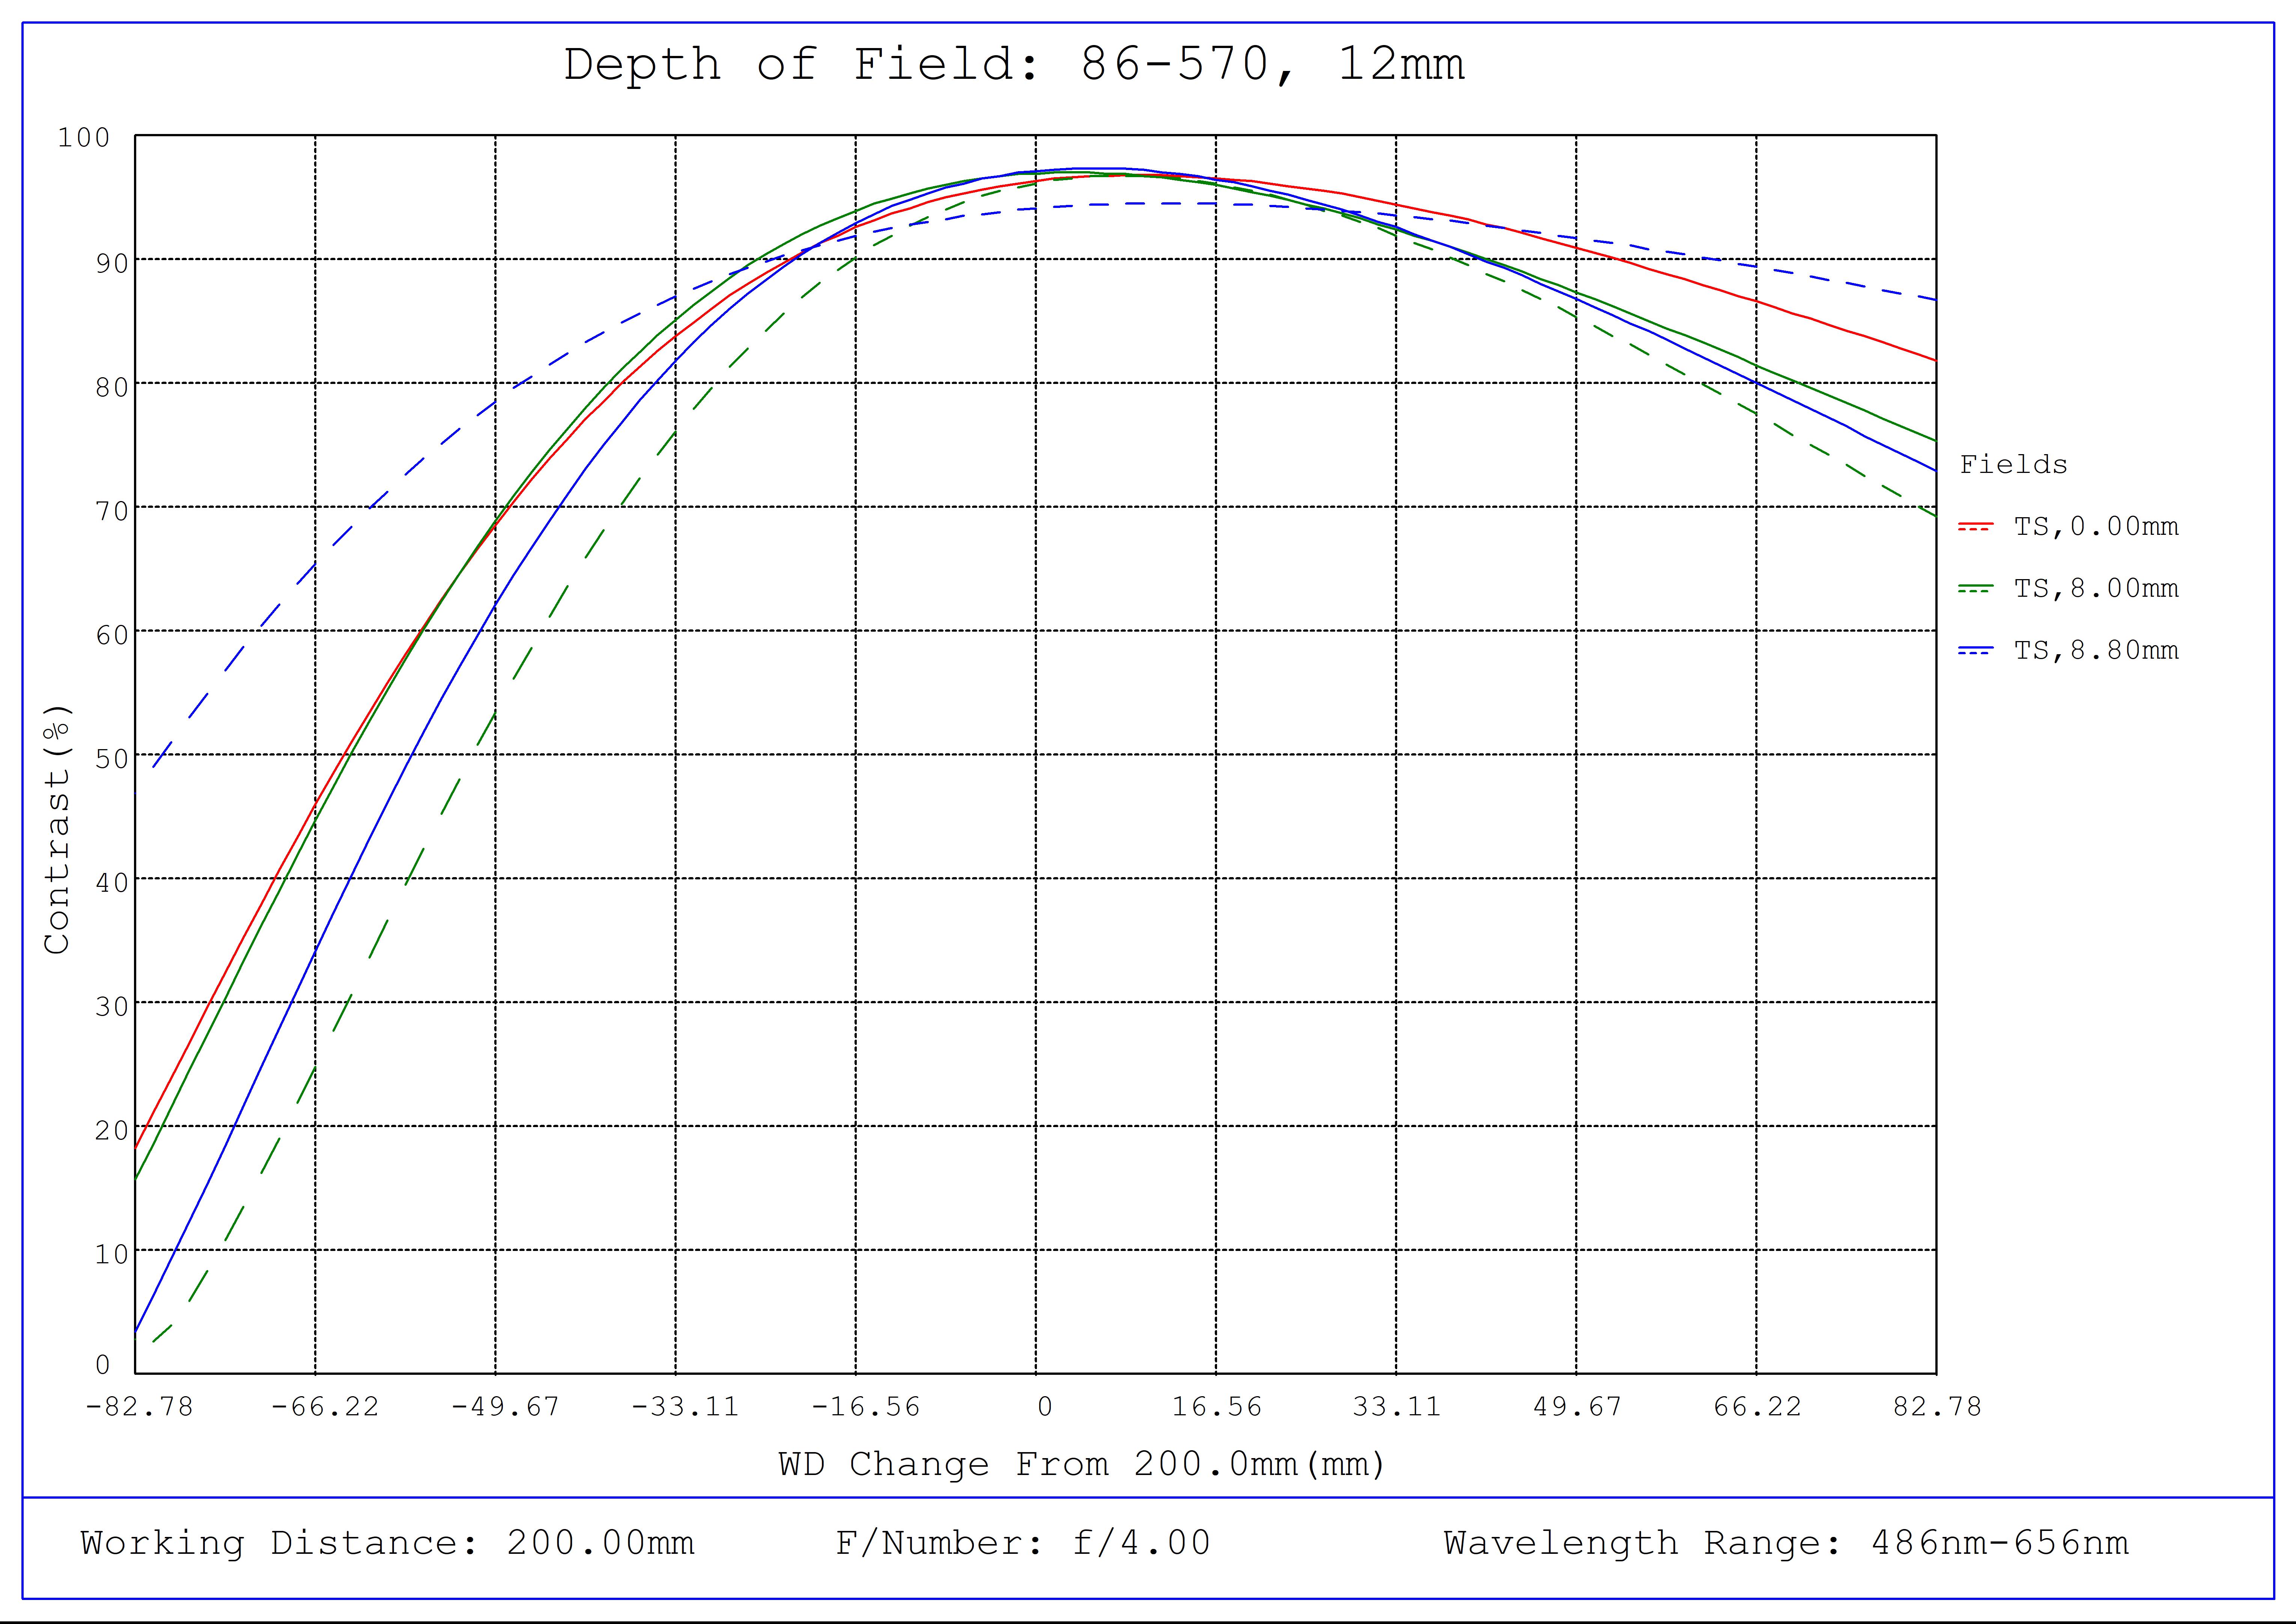 #86-570, 12mm Focal Length, HP Series Fixed Focal Length Lens, Depth of Field Plot, 200mm Working Distance, f4